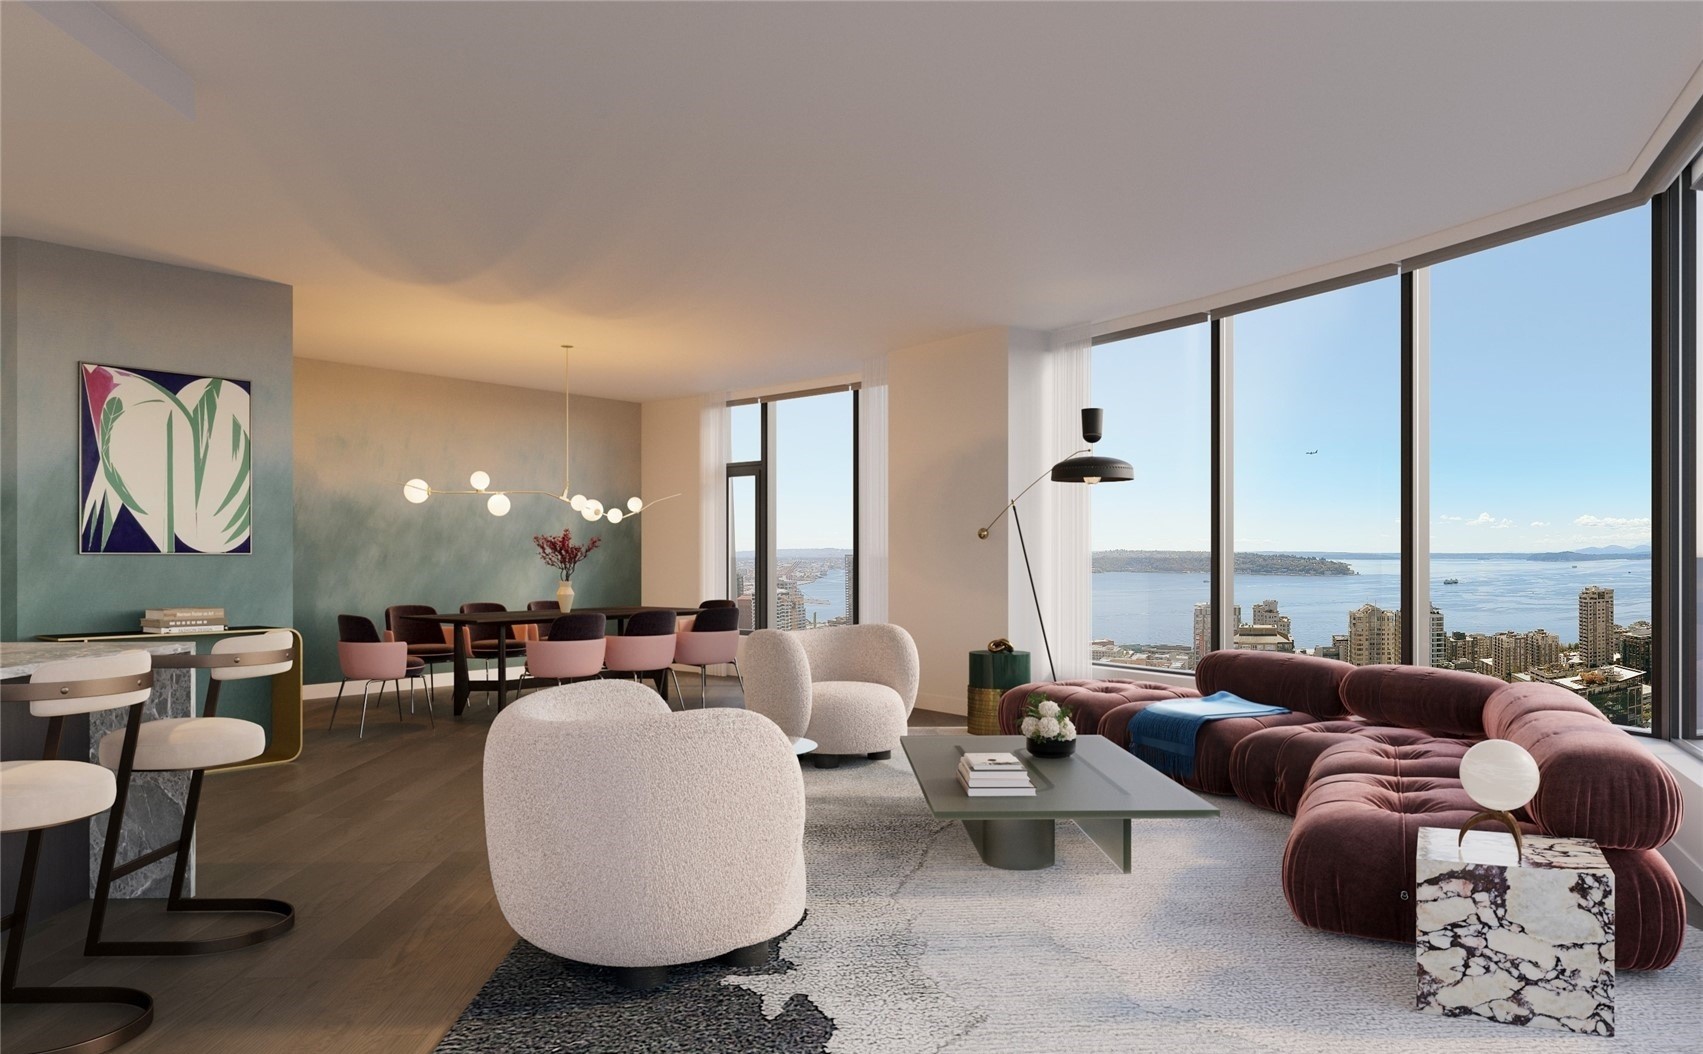 3d-living-area-interior-rendering-penthouse-condo-seattle-washington